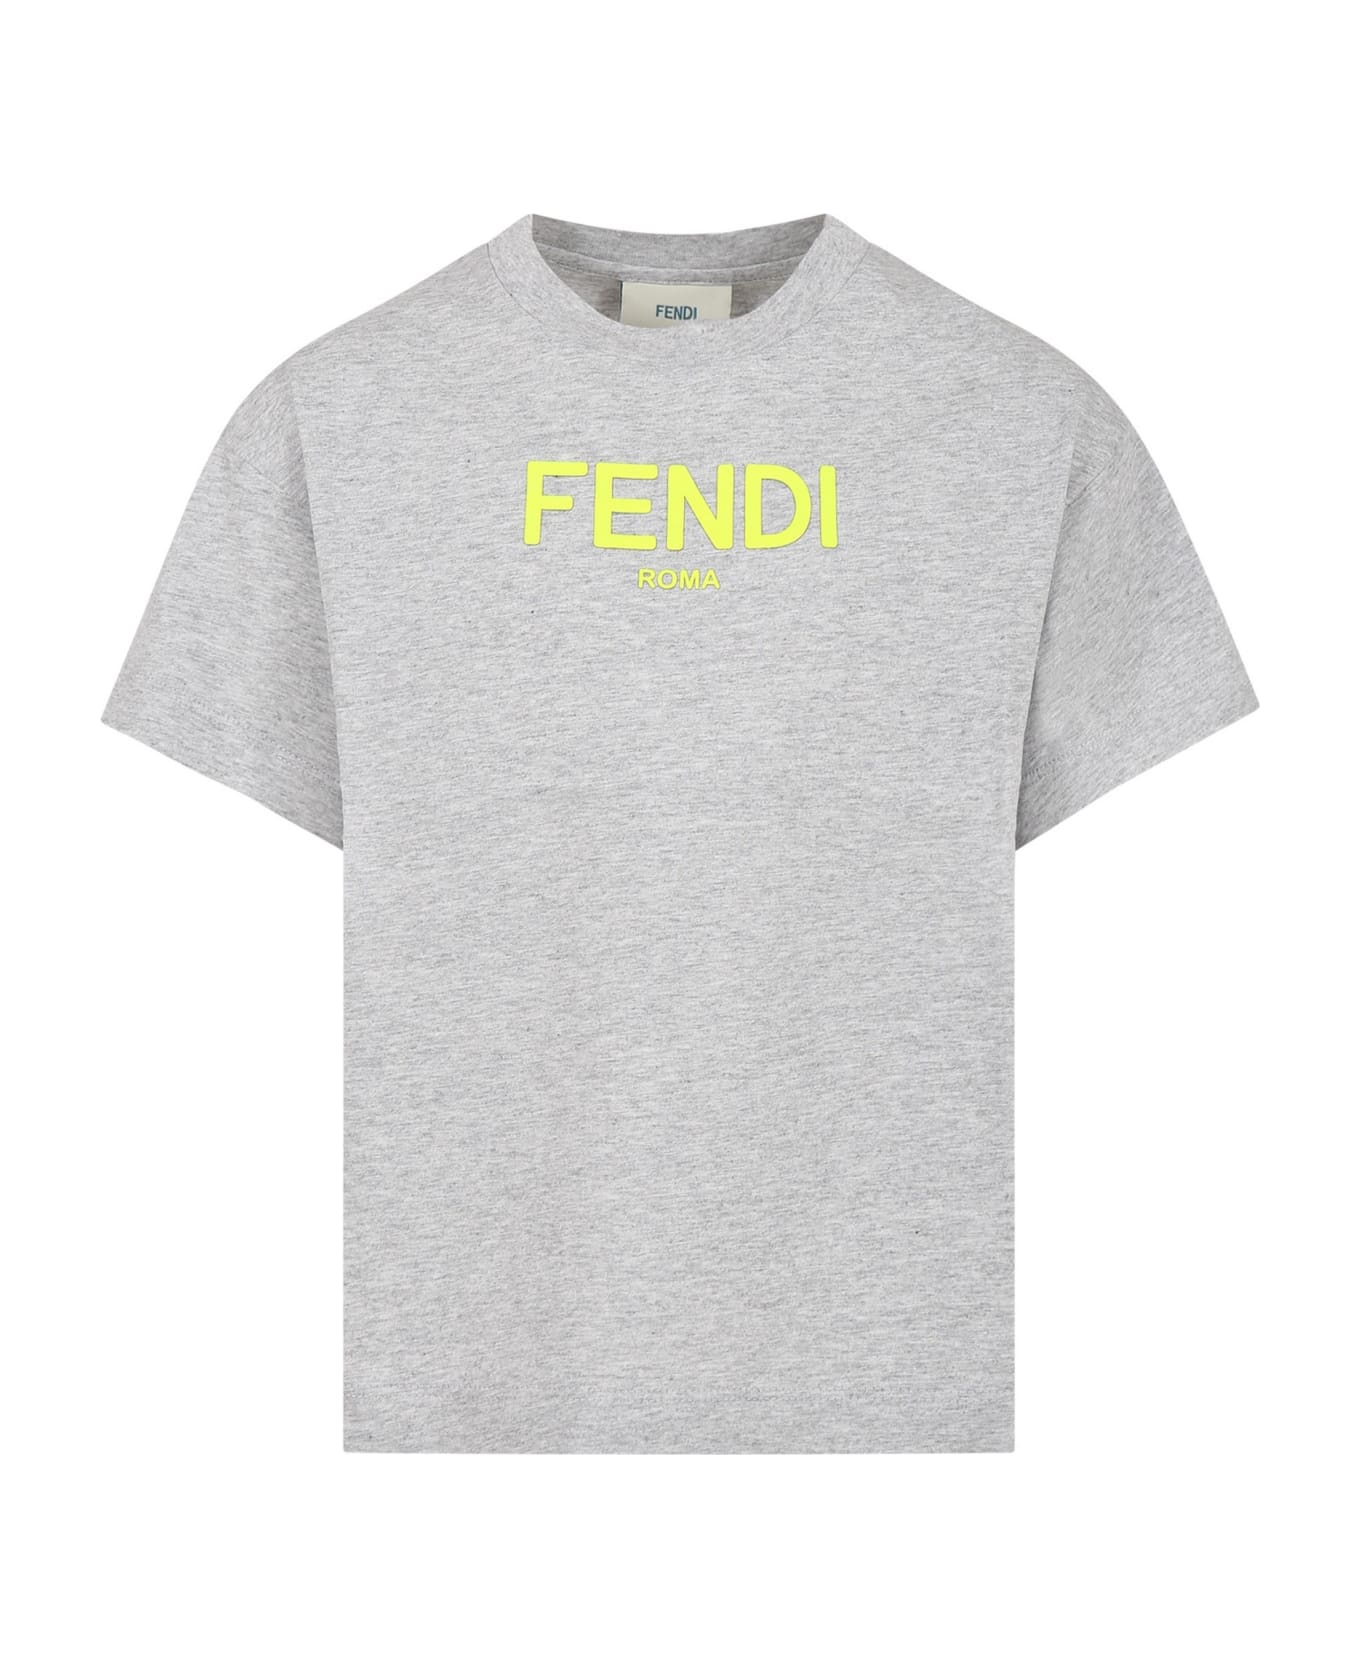 Fendi Grey T-shirt For Kids With Logo - Grey